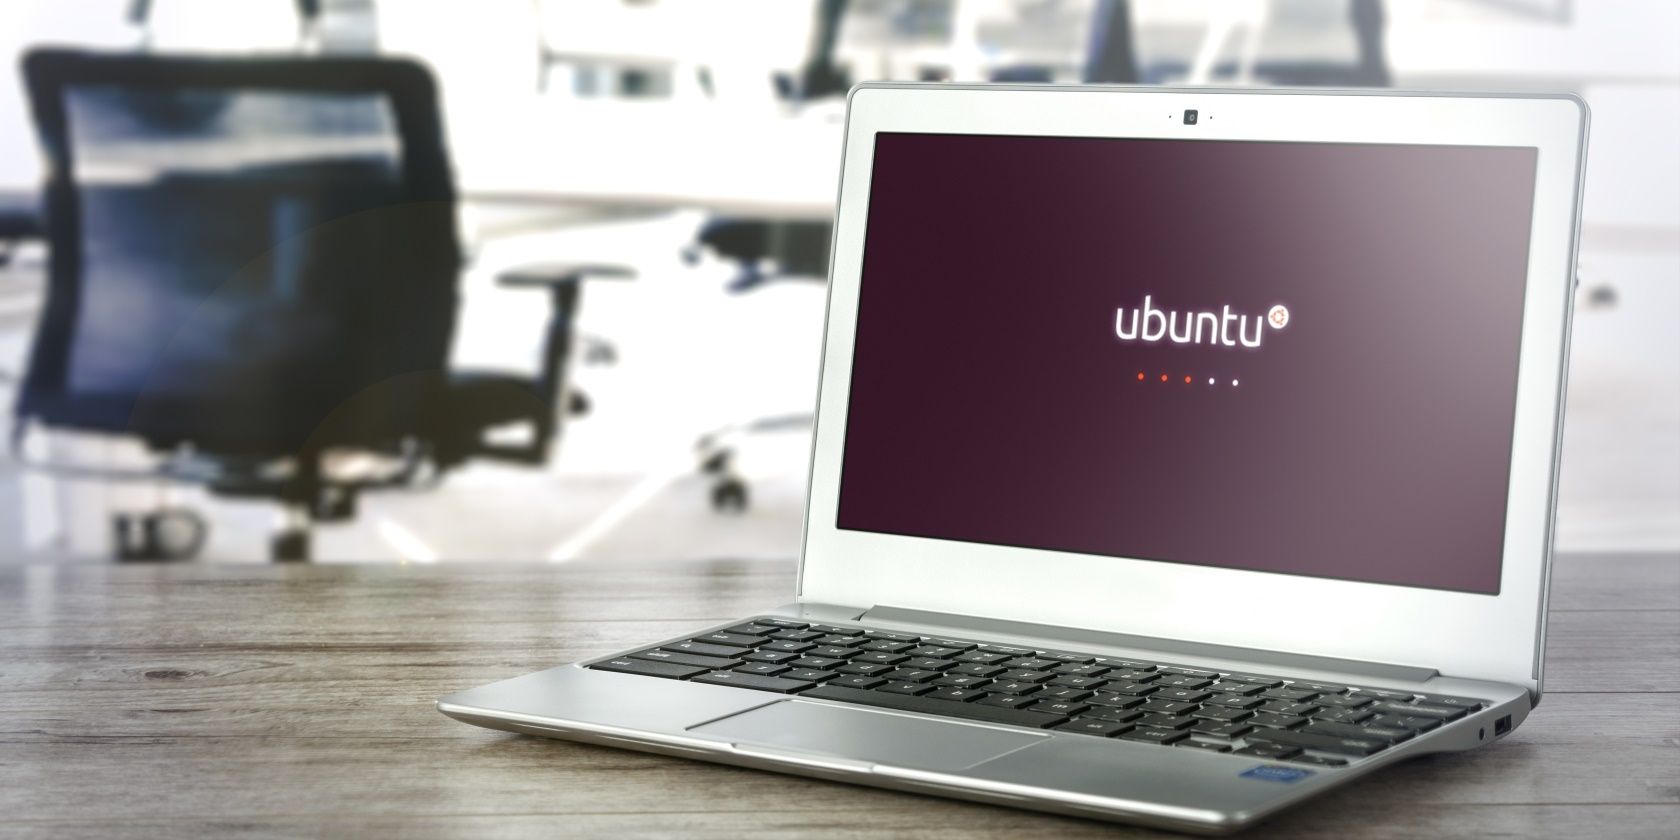 muo linux ubuntu splash screen featured